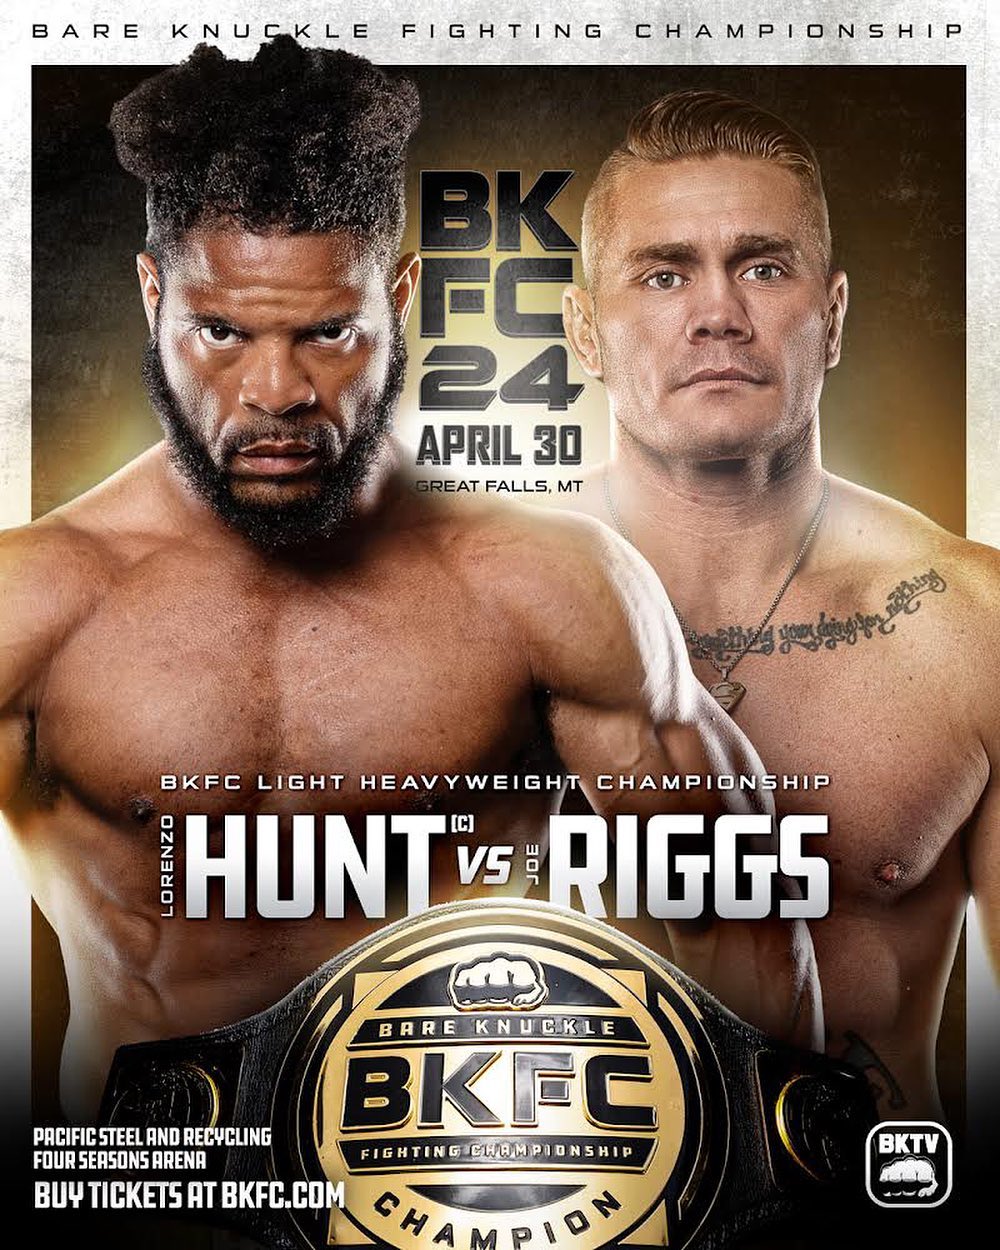 Bare Knuckle FC 24 - Hunt vs Riggs